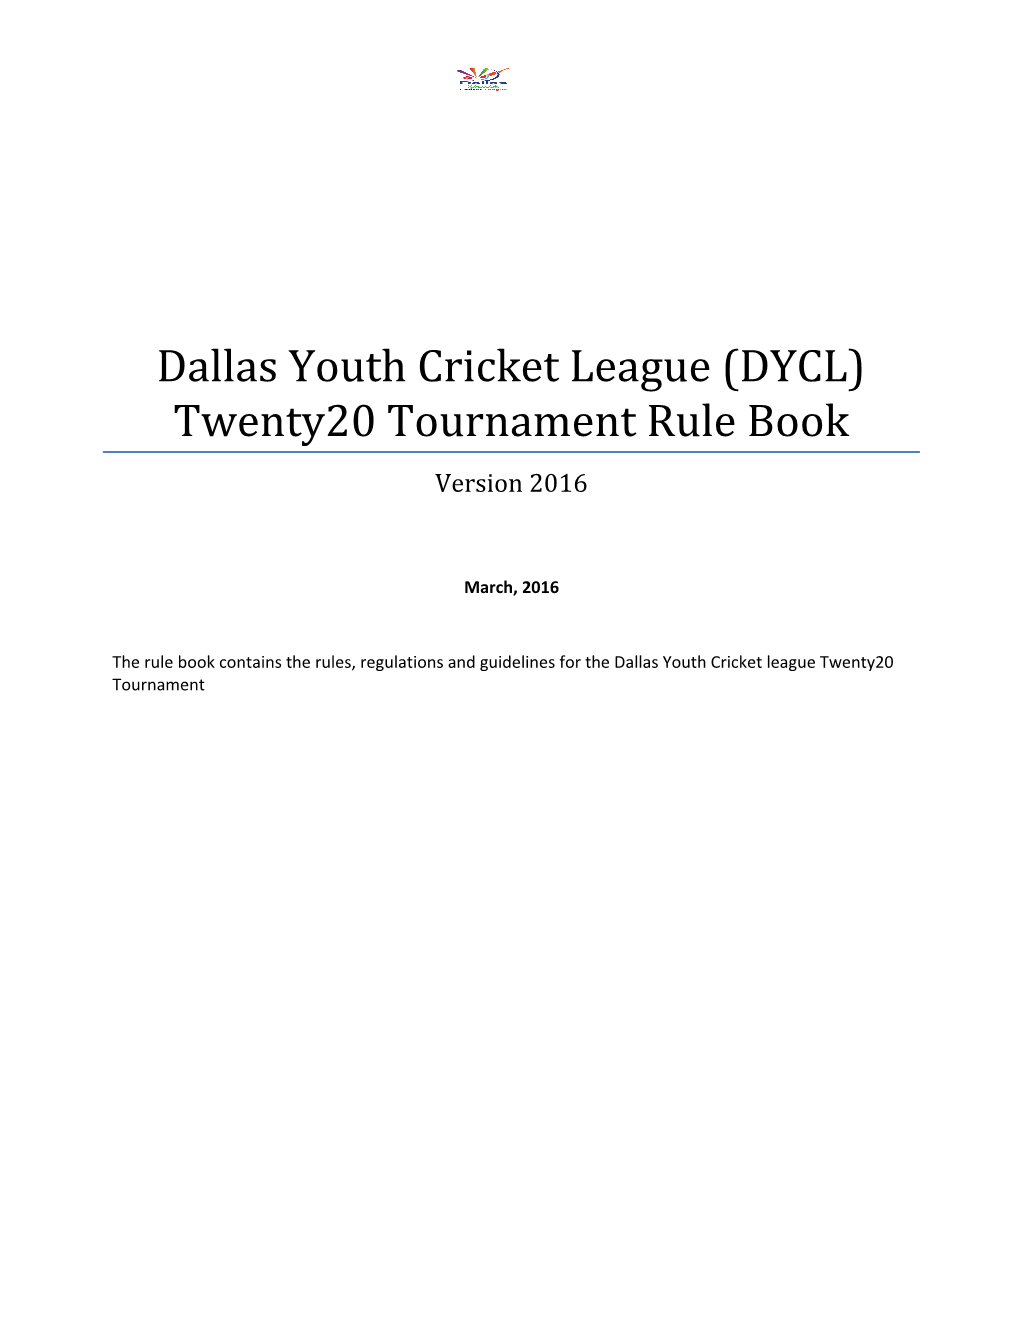 Dallas Youth Cricket League (DYCL) Twenty20 Tournament Rule Book